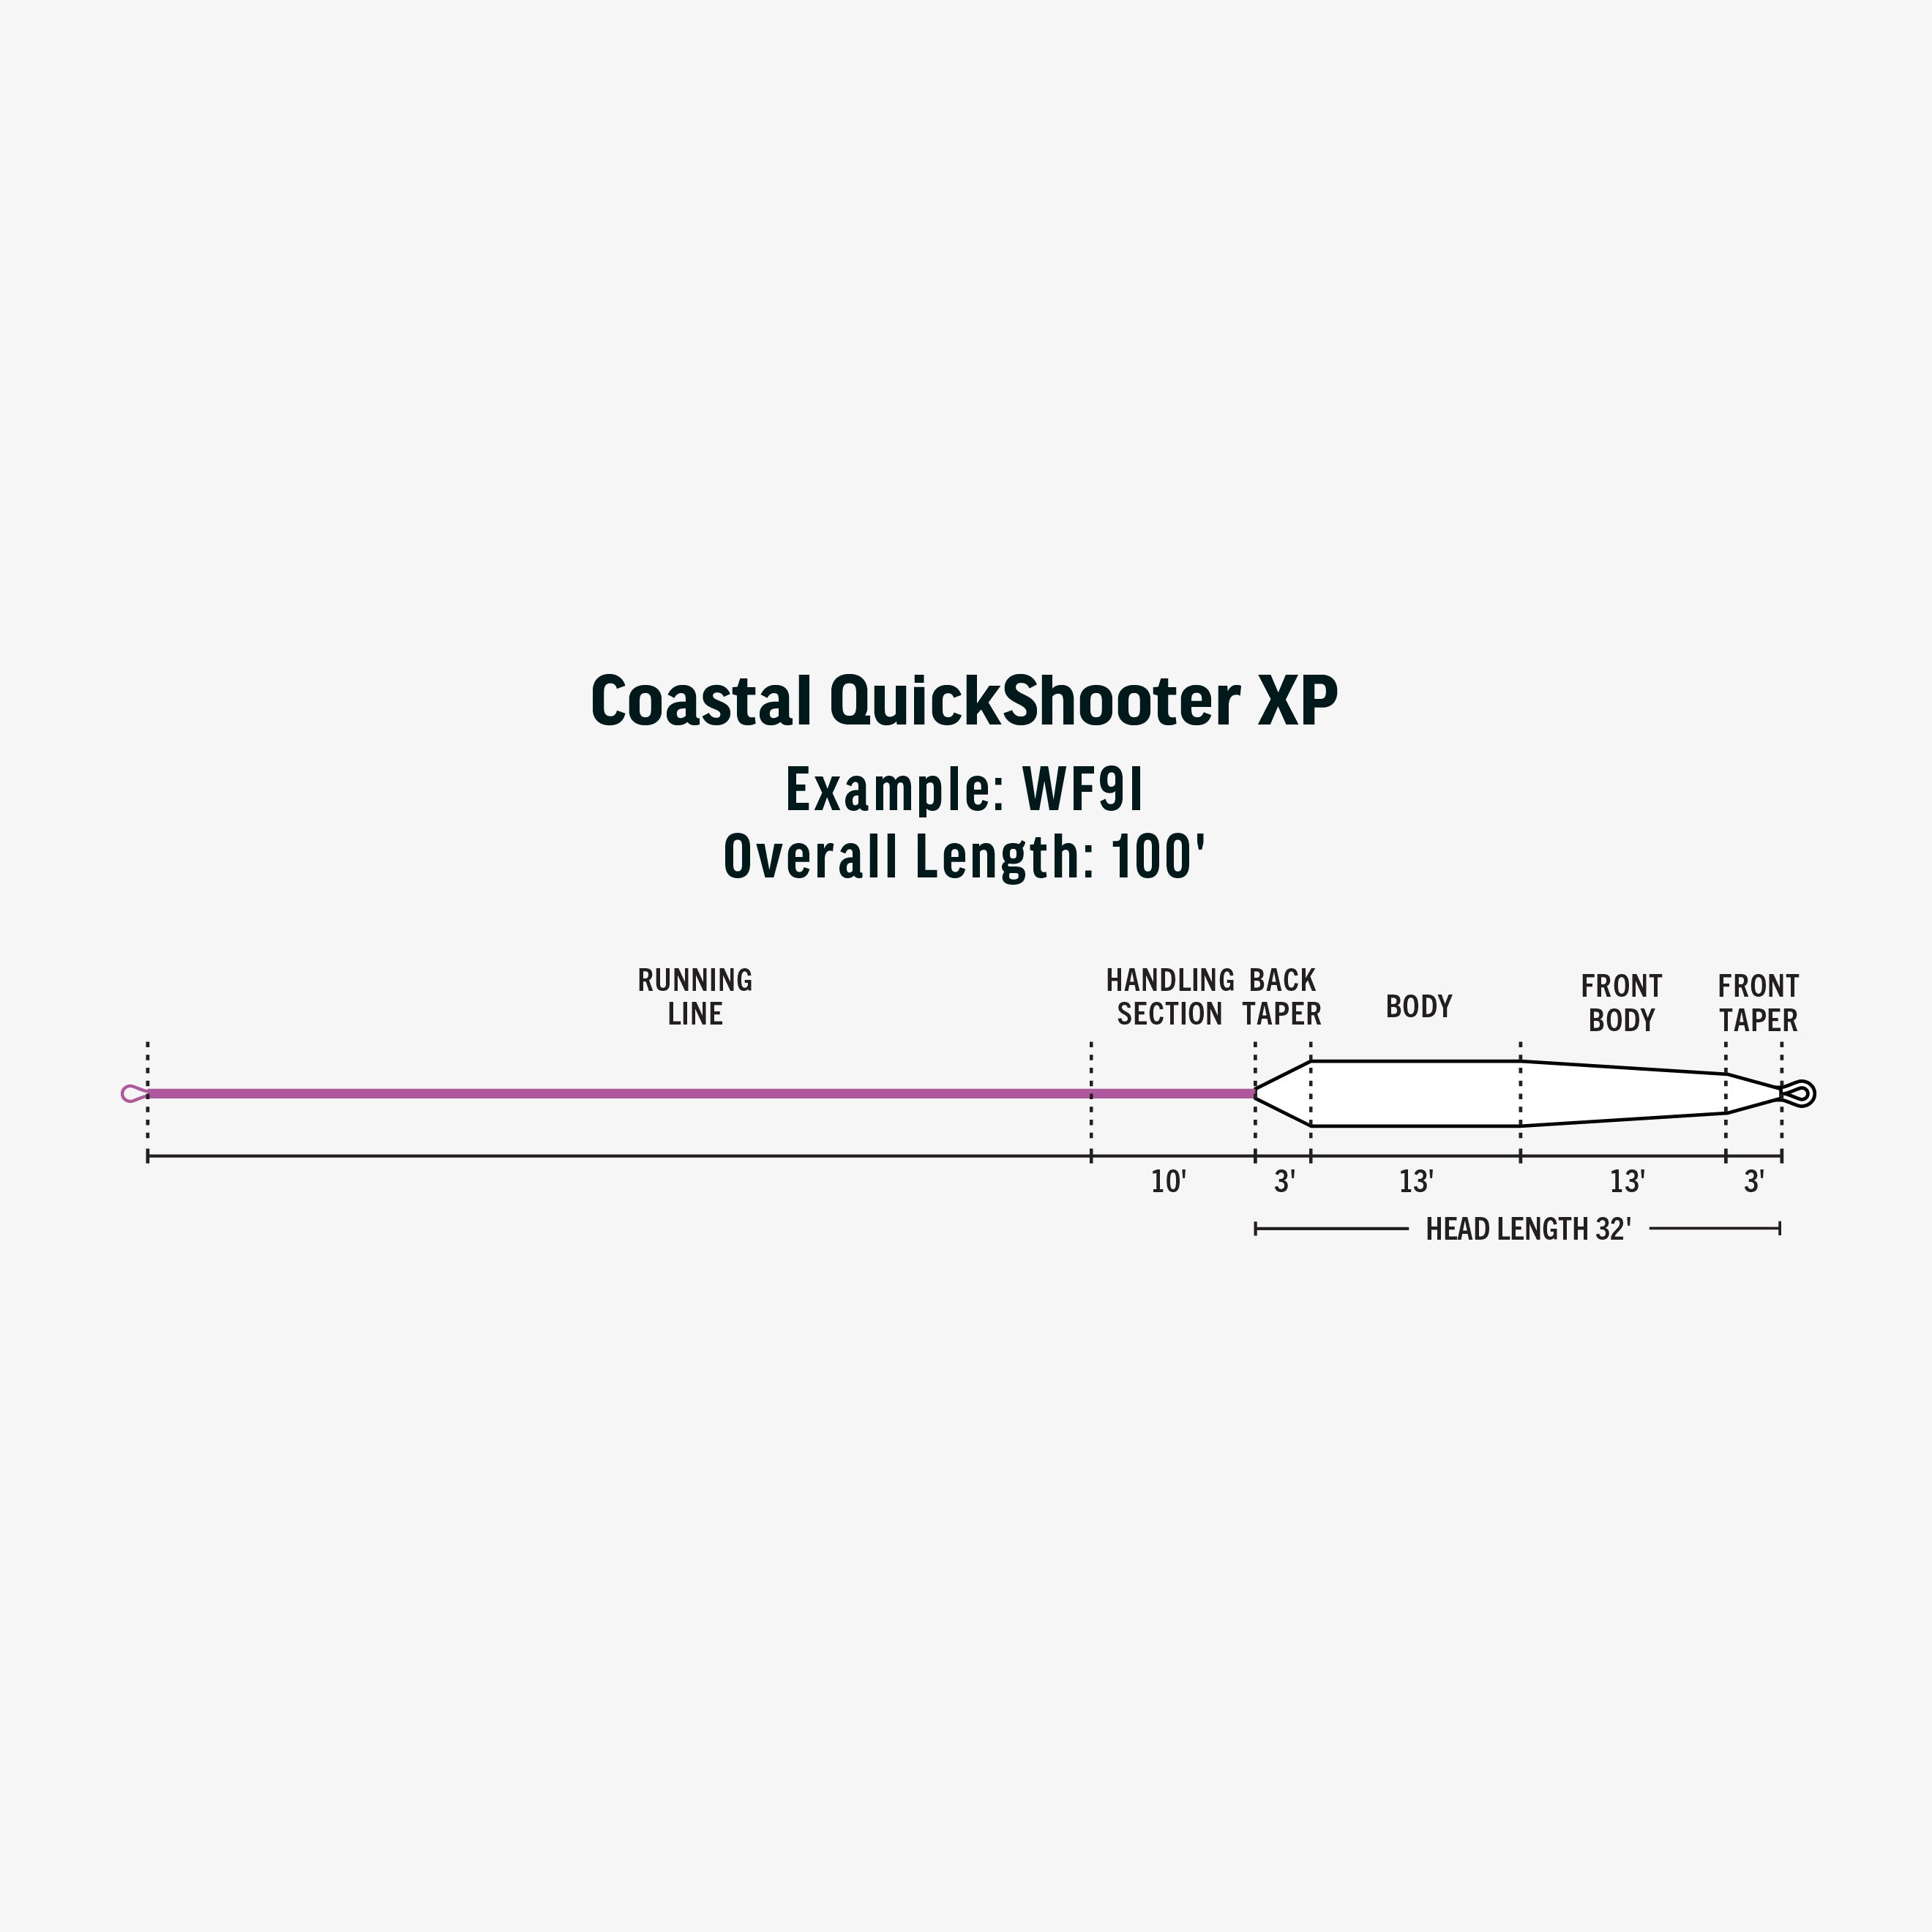 Premier Coastal Quickshooter XP